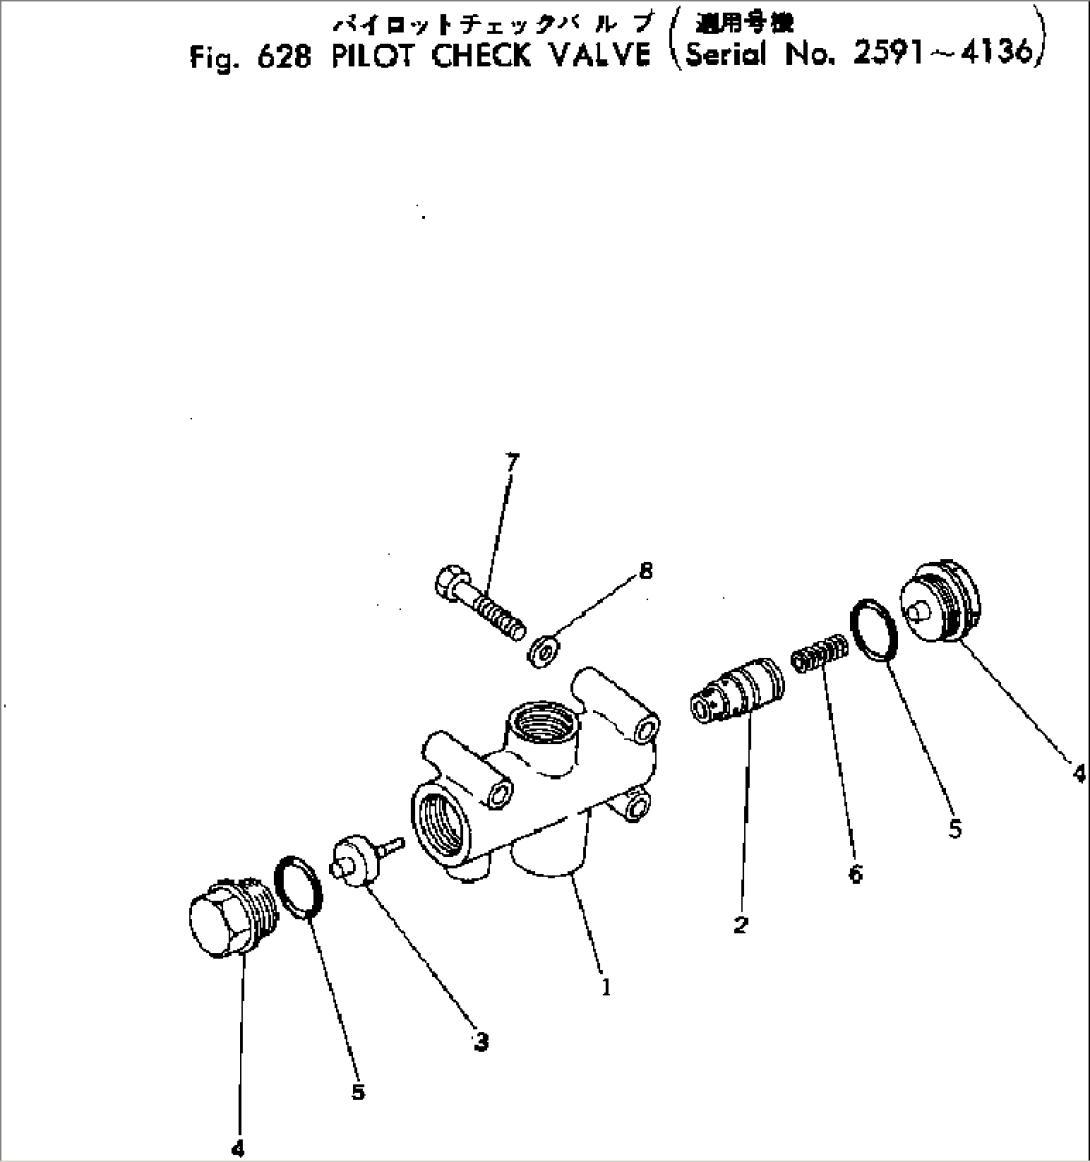 PILOT CHECK VALVE(#2591-4136)